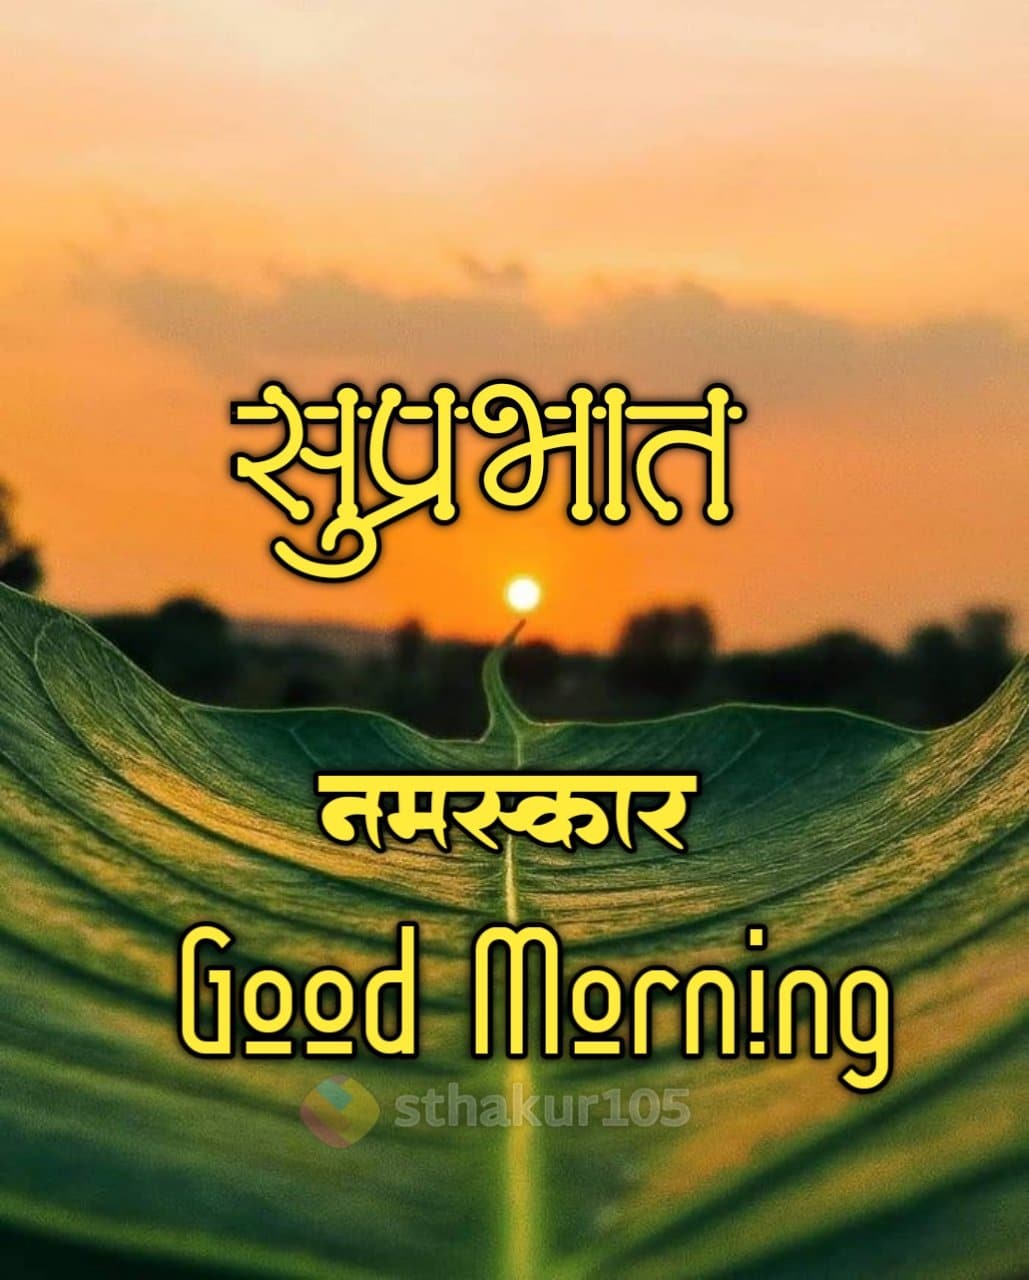 Shubh Sakal Nature Images, Suprabhat Nature Good Morning Marathi